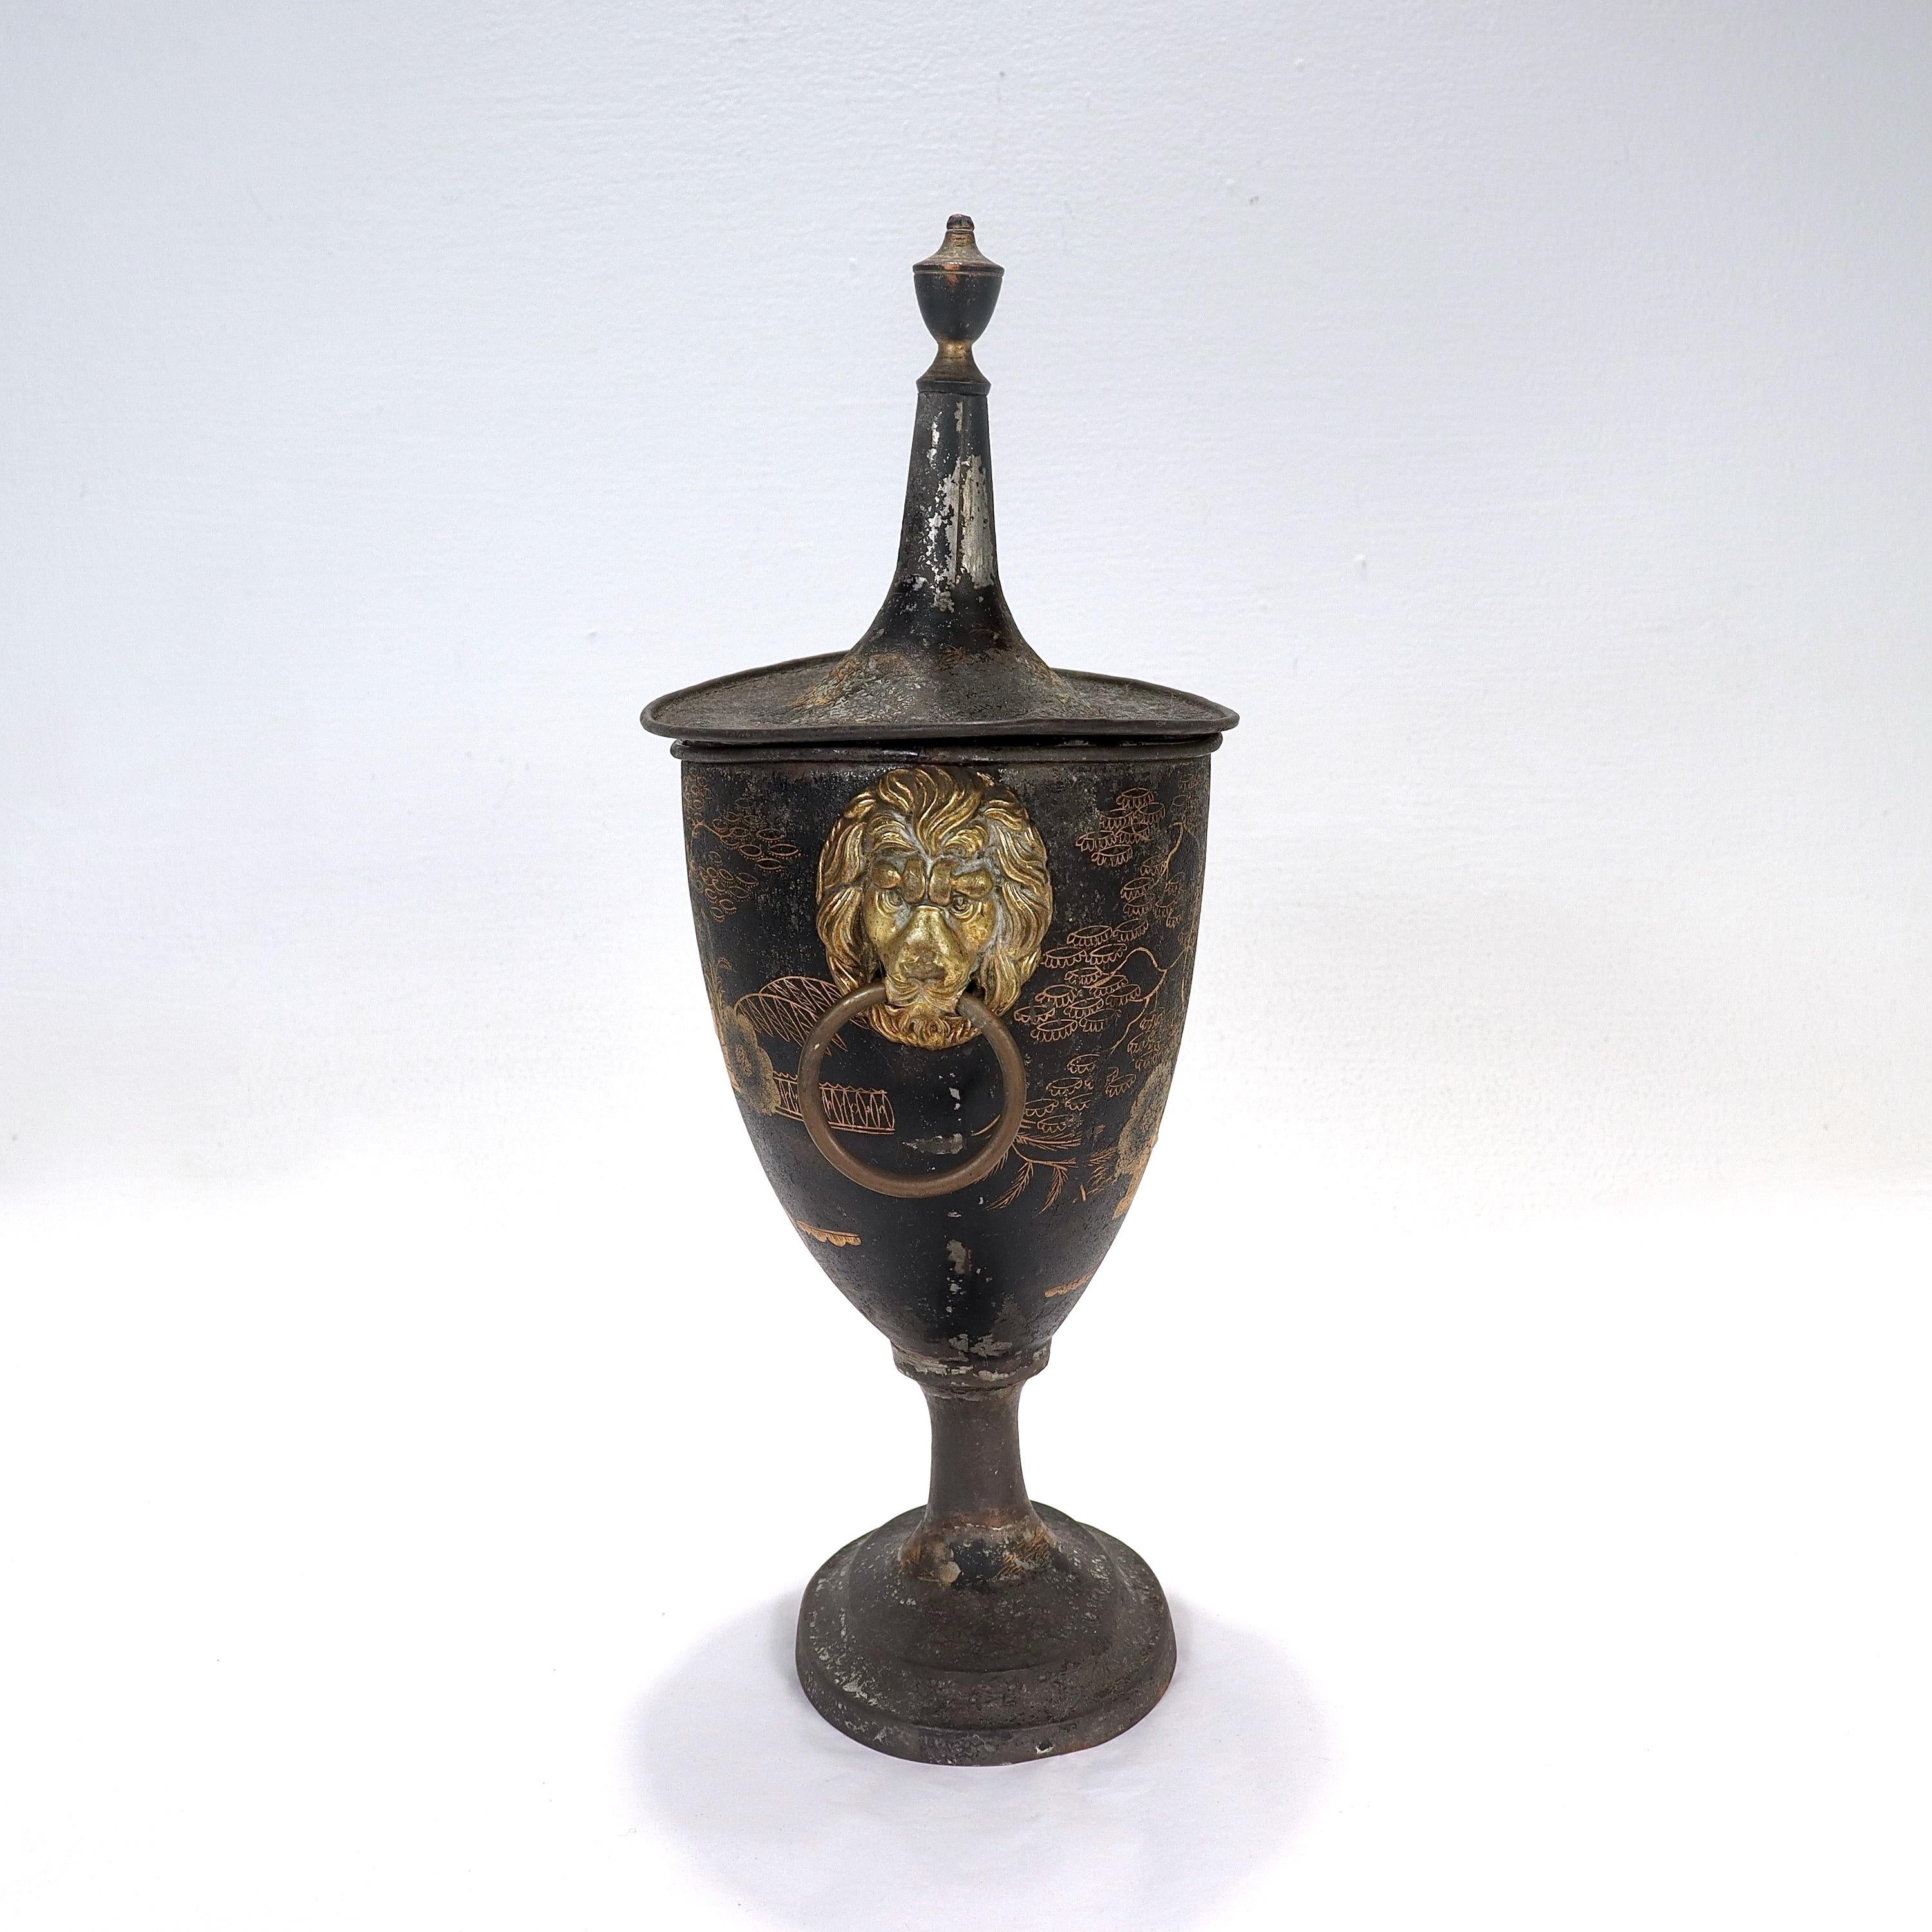 Gilt Antique English Regency Chinoiserie Toleware Covered Chestnut Urn or Vase